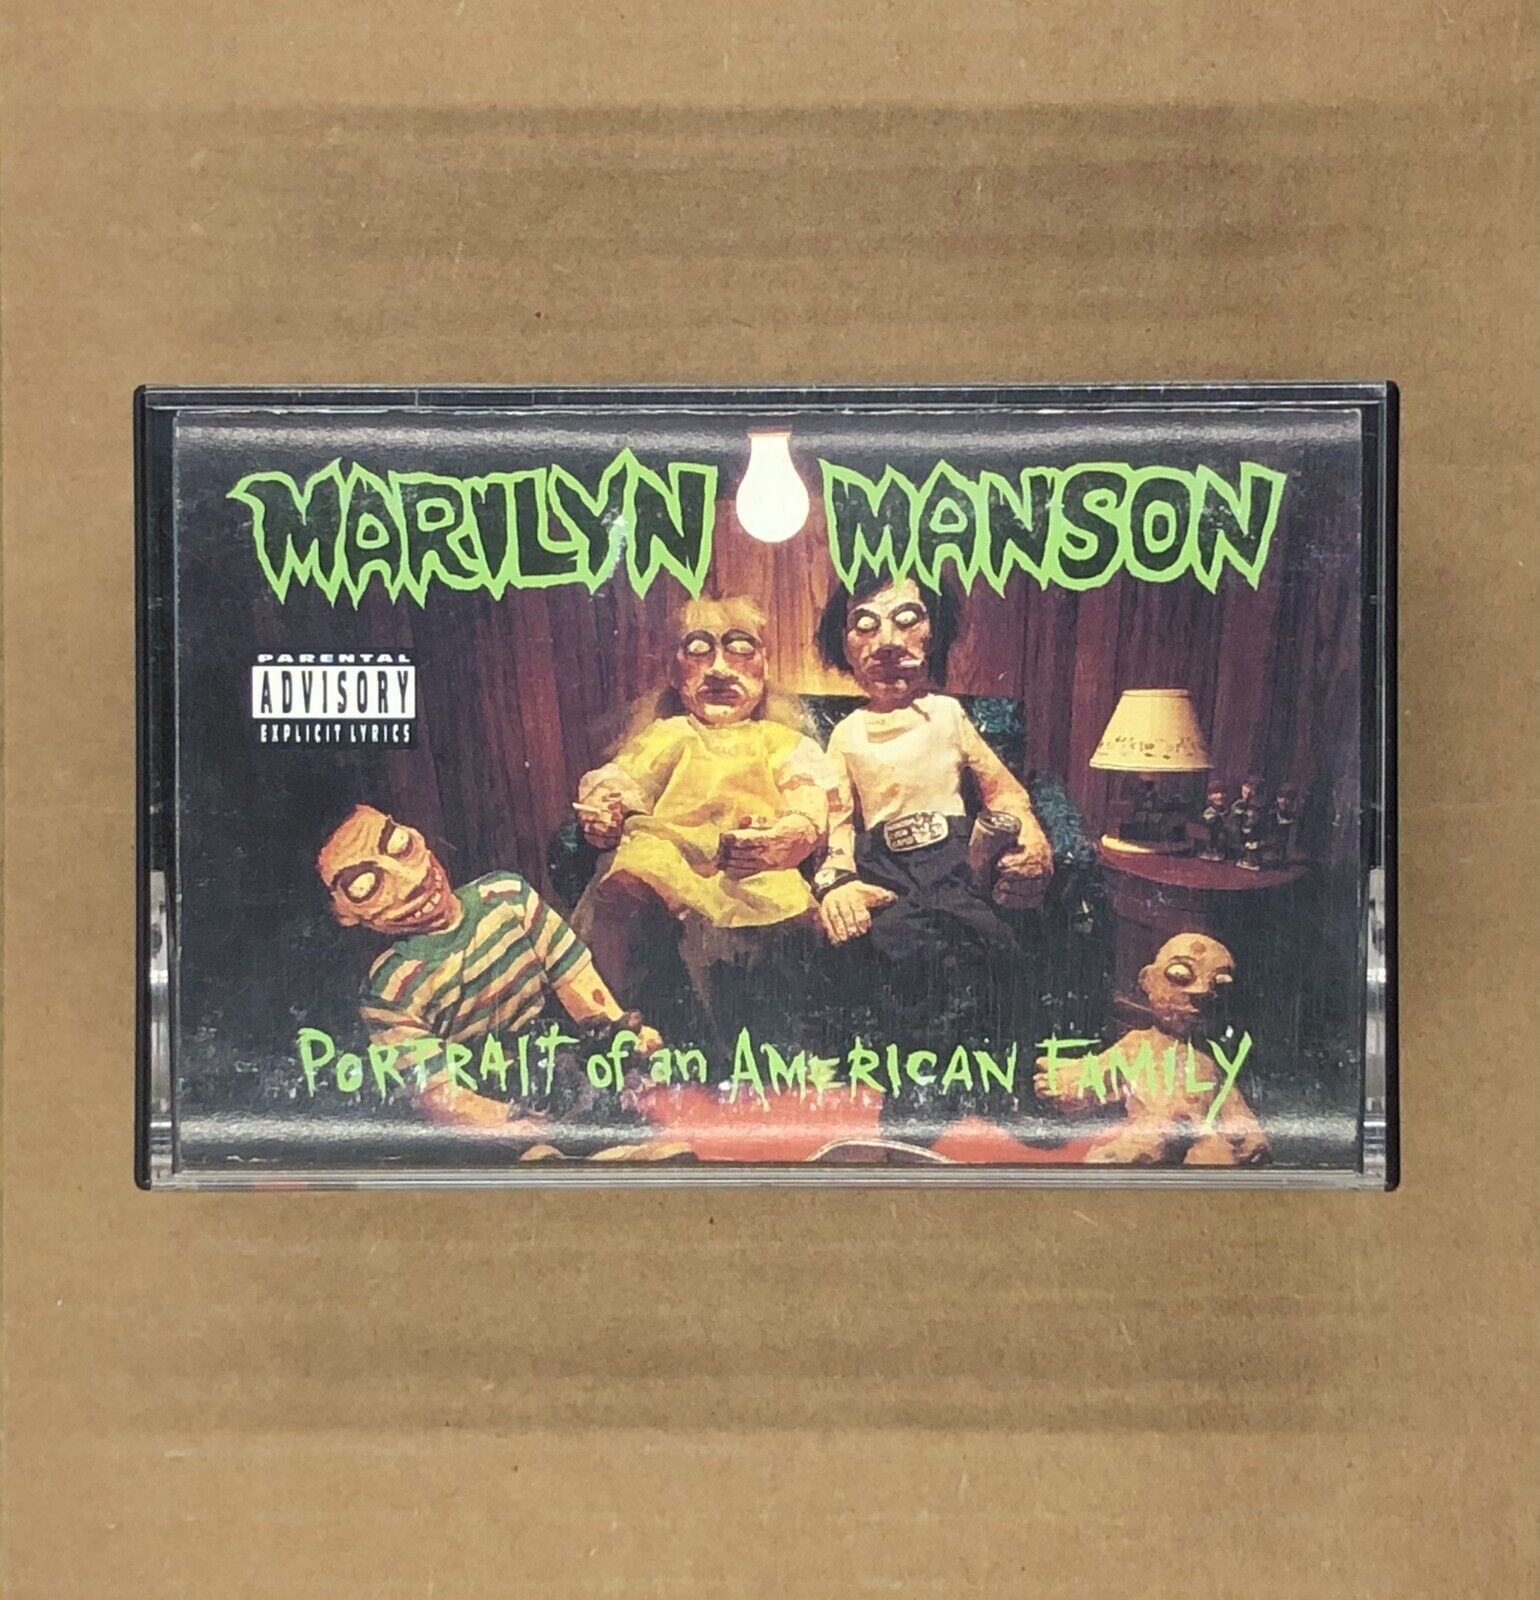 MARILYN MANSON Cassette Tape PORTRAIT OF AN AMERICAN FAMILY 1994 90s VINTAGE